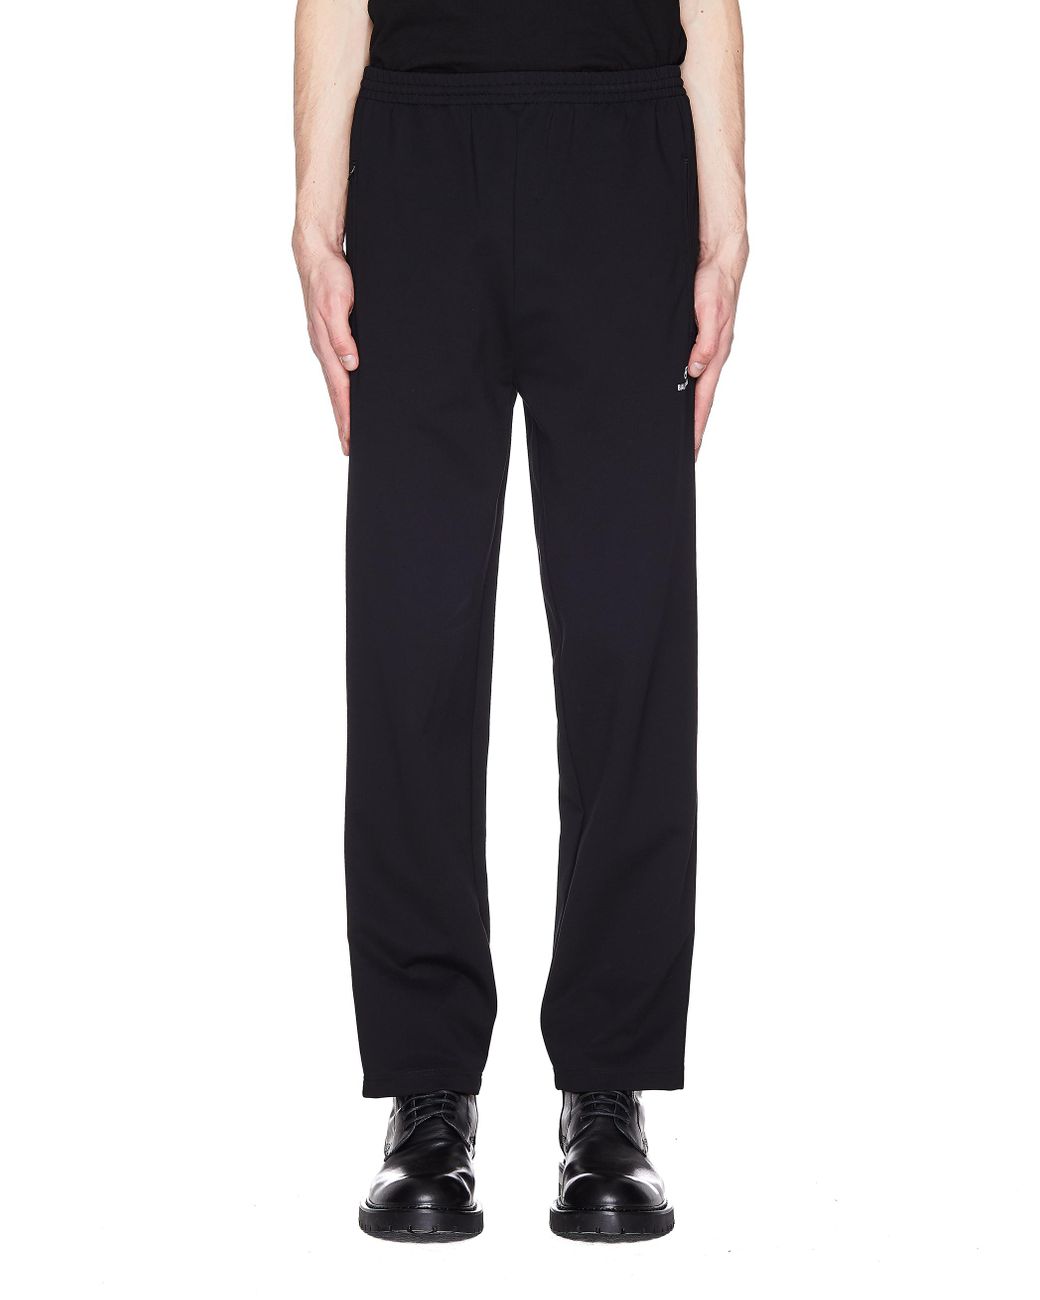 Balenciaga Satin Black Logo Printed Sweatpants for Men - Lyst